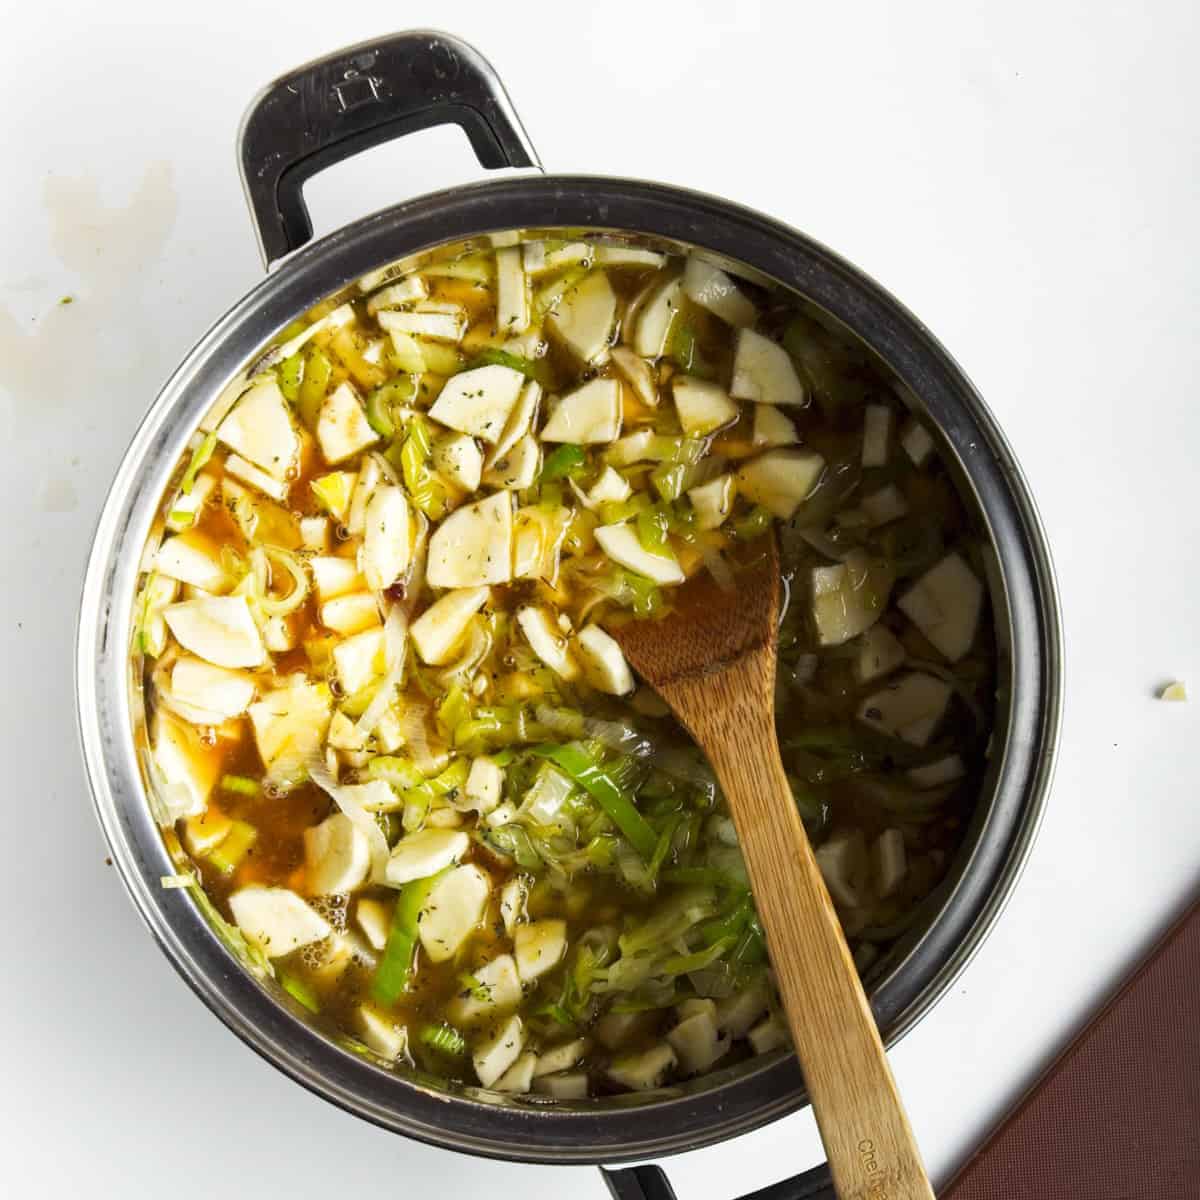 Parsnip and leek soup ingredients simmering in saucepan with wooden spoon.